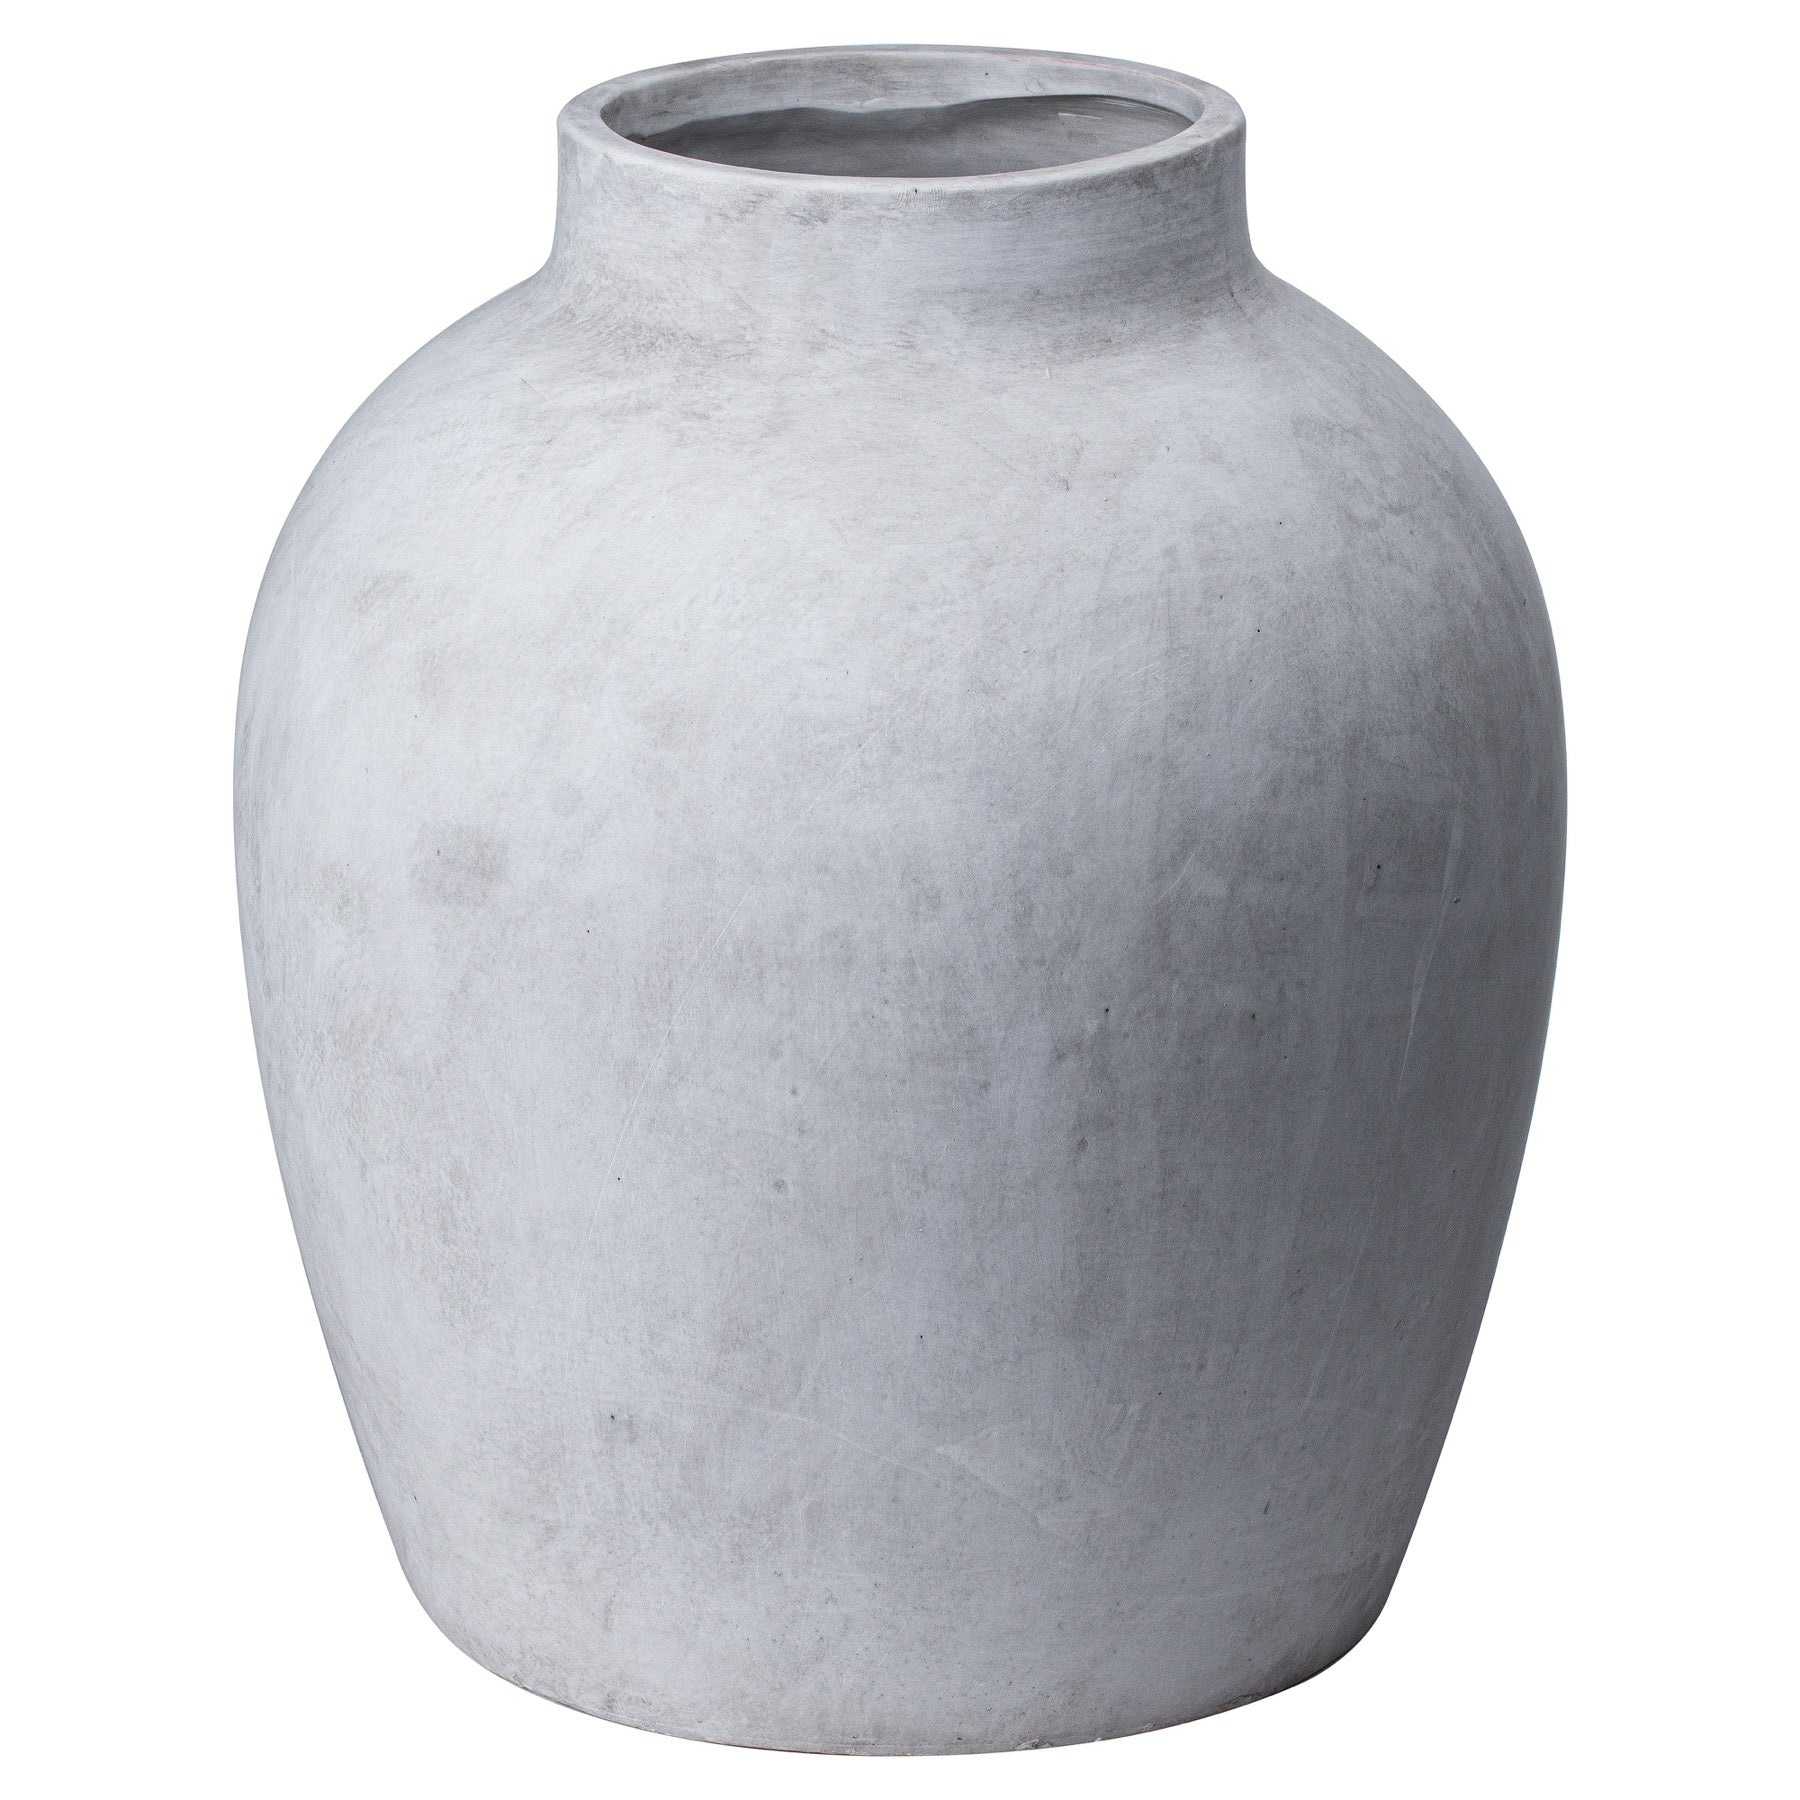 View Darcy Stone Vase information